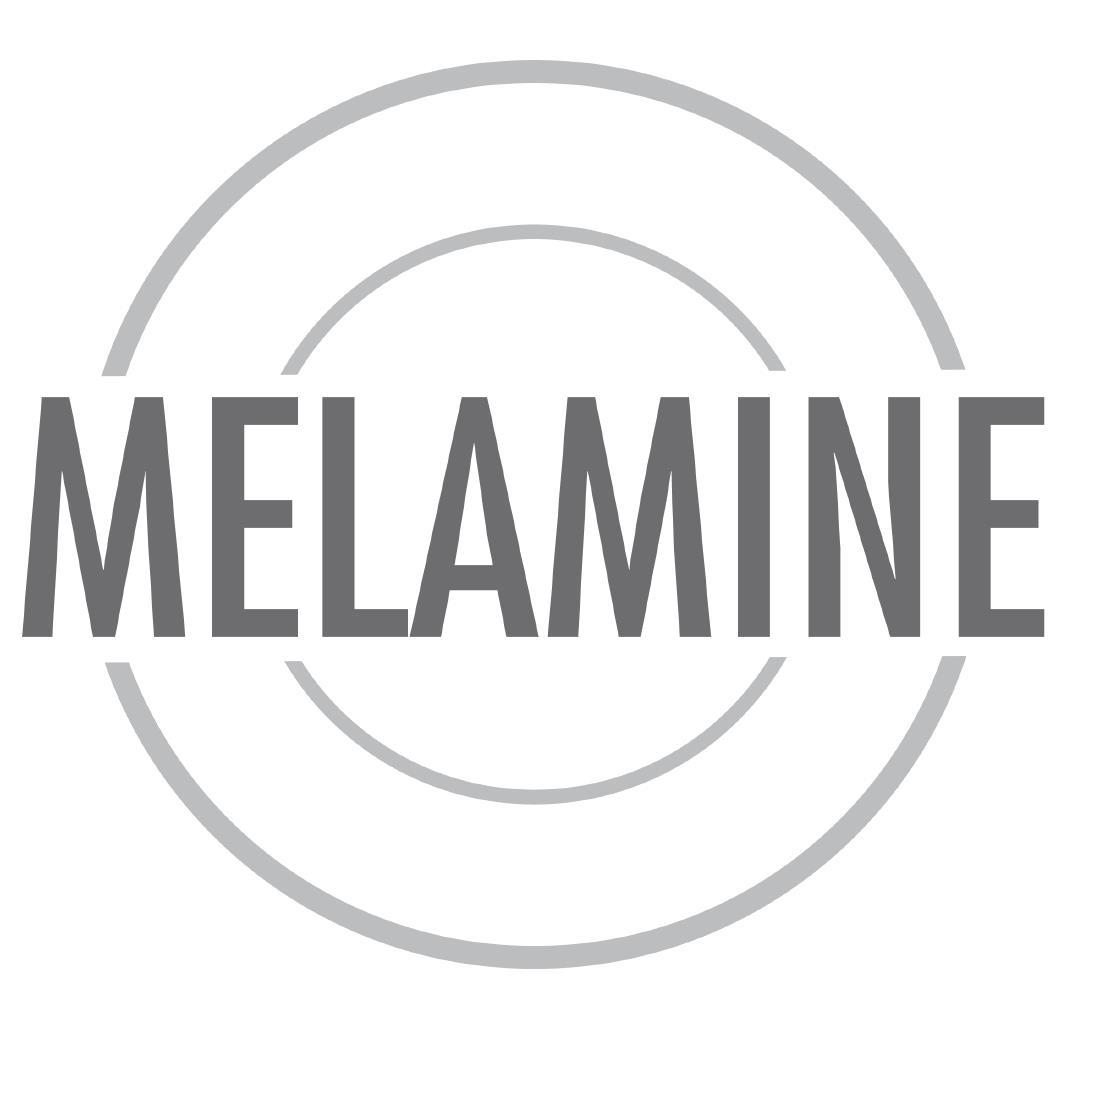 Melamine Burgundy Placemat - P349  - 2